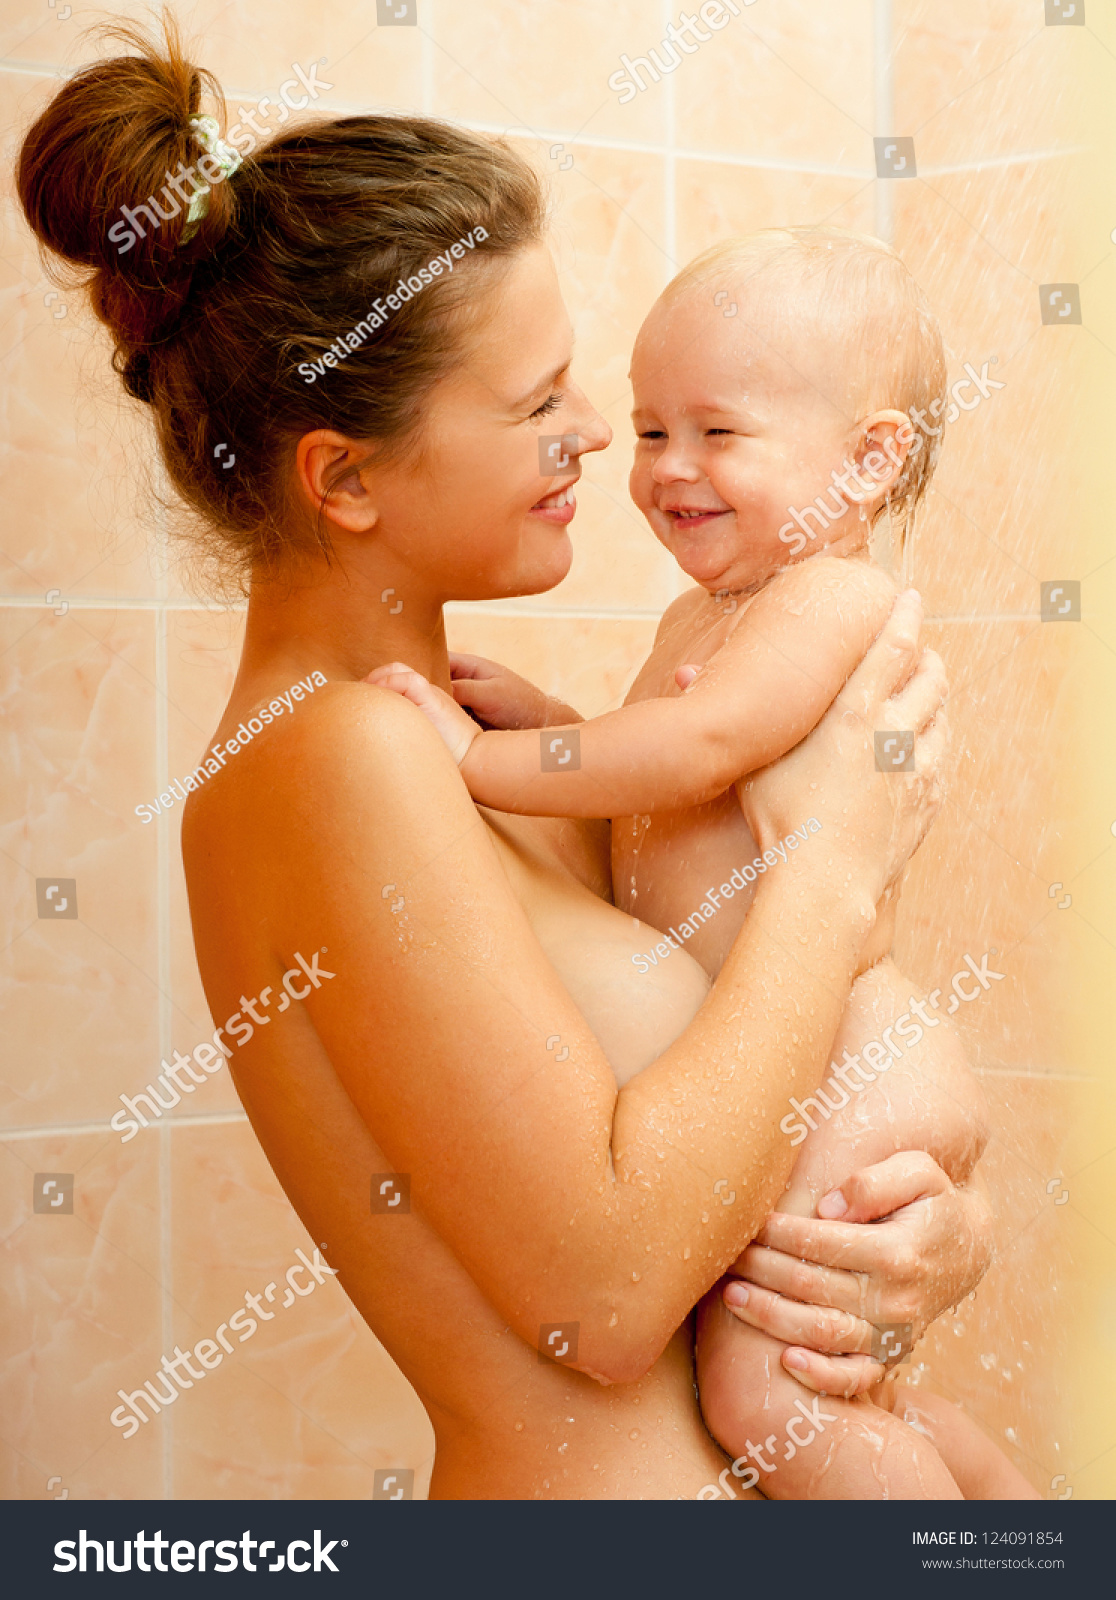 Стоковая фотография 124091854: Mother Baby Daughter Shower Shutterstock.